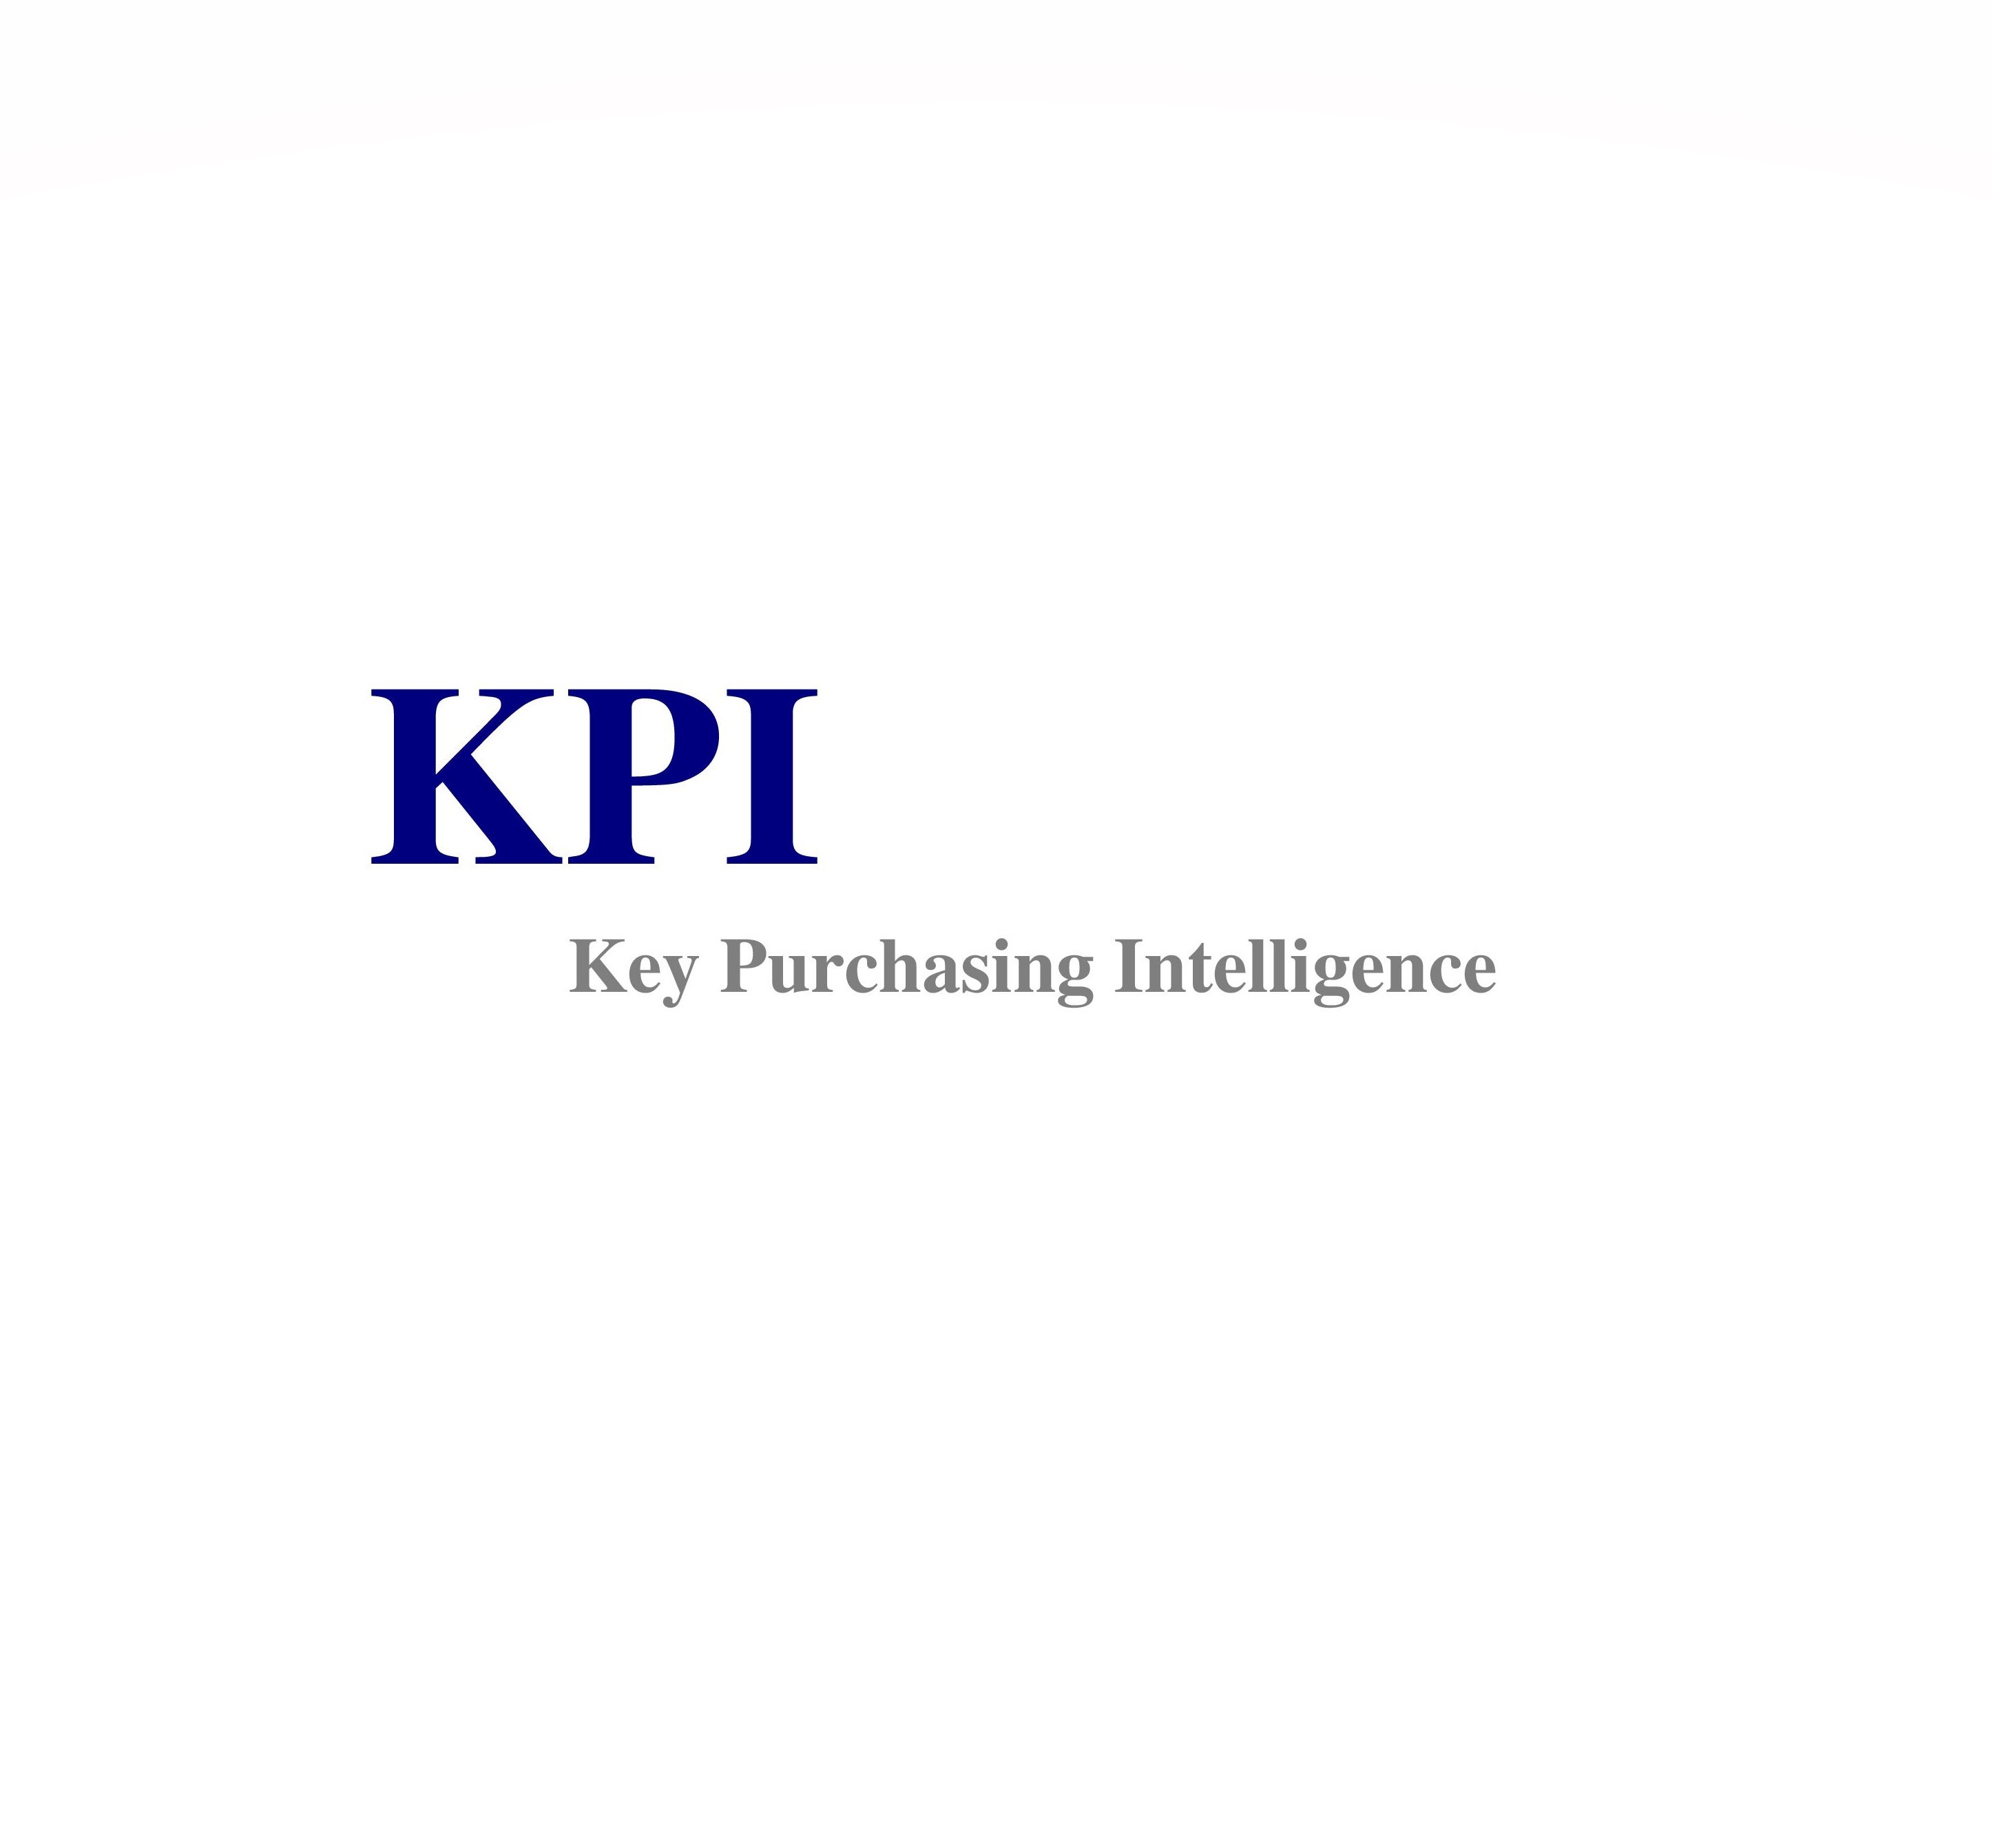 KPI Services Ltd